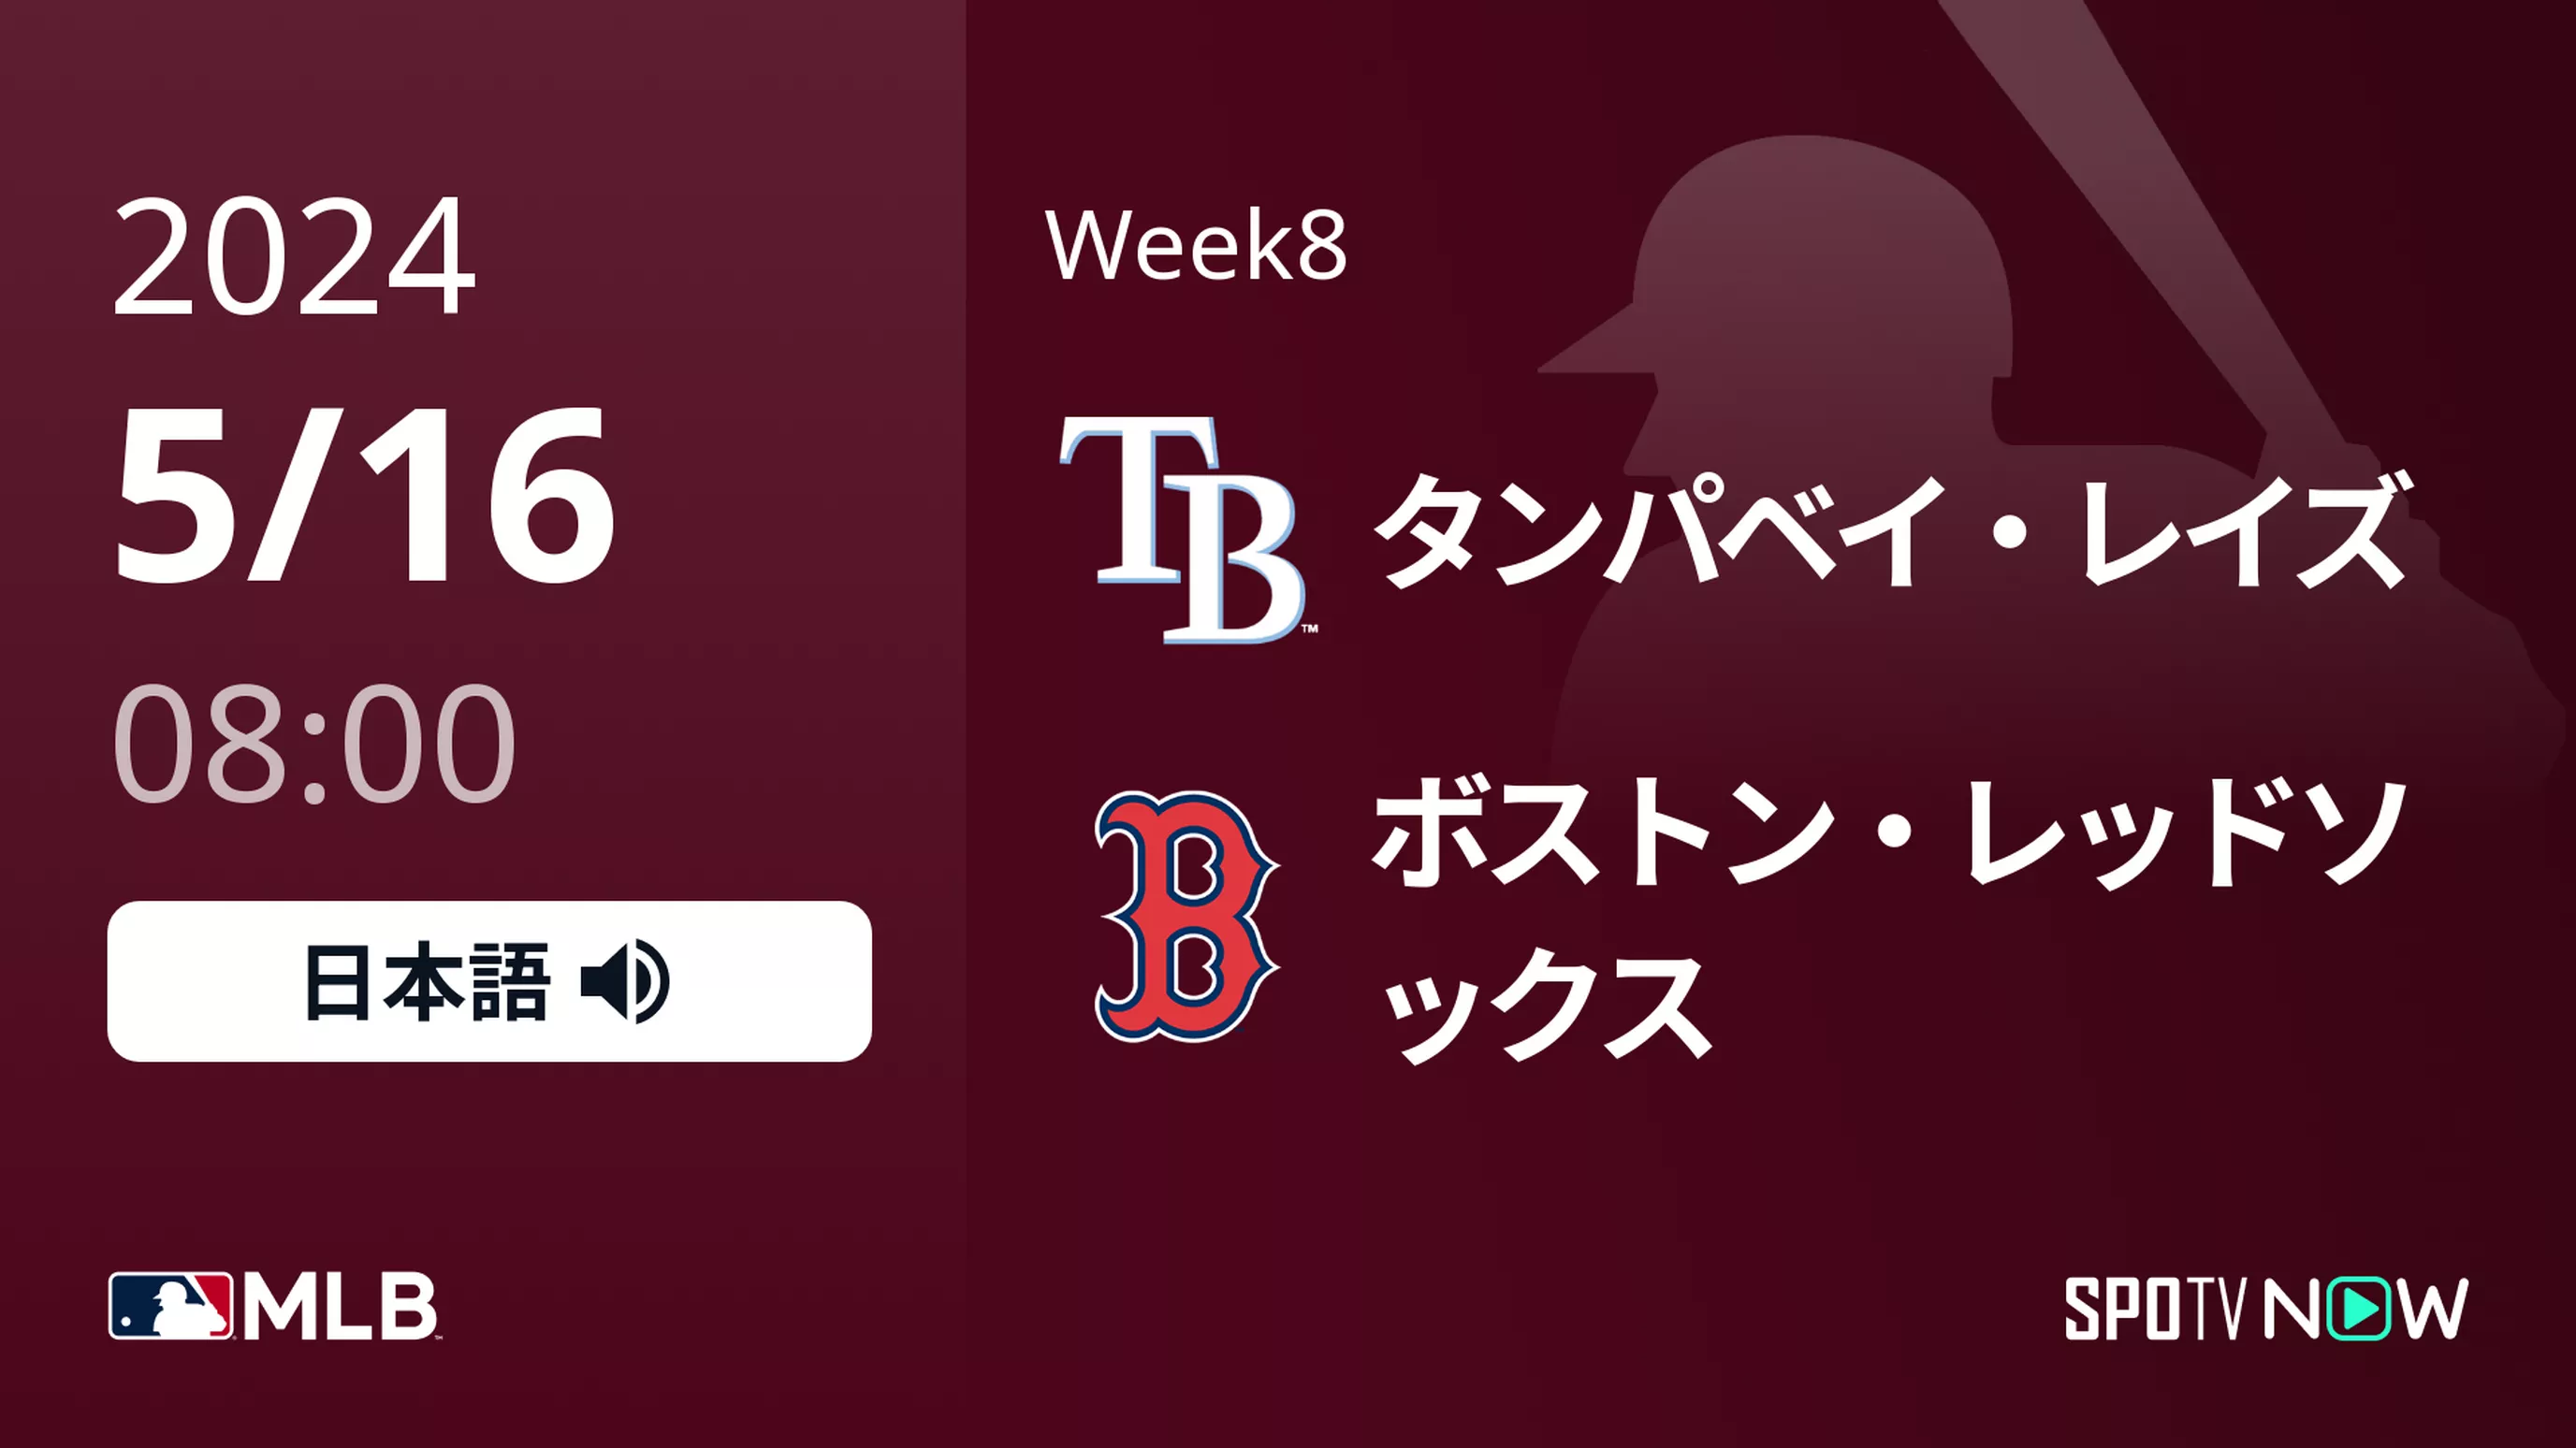 Week8 レイズ vs Rソックス 5/16[MLB]